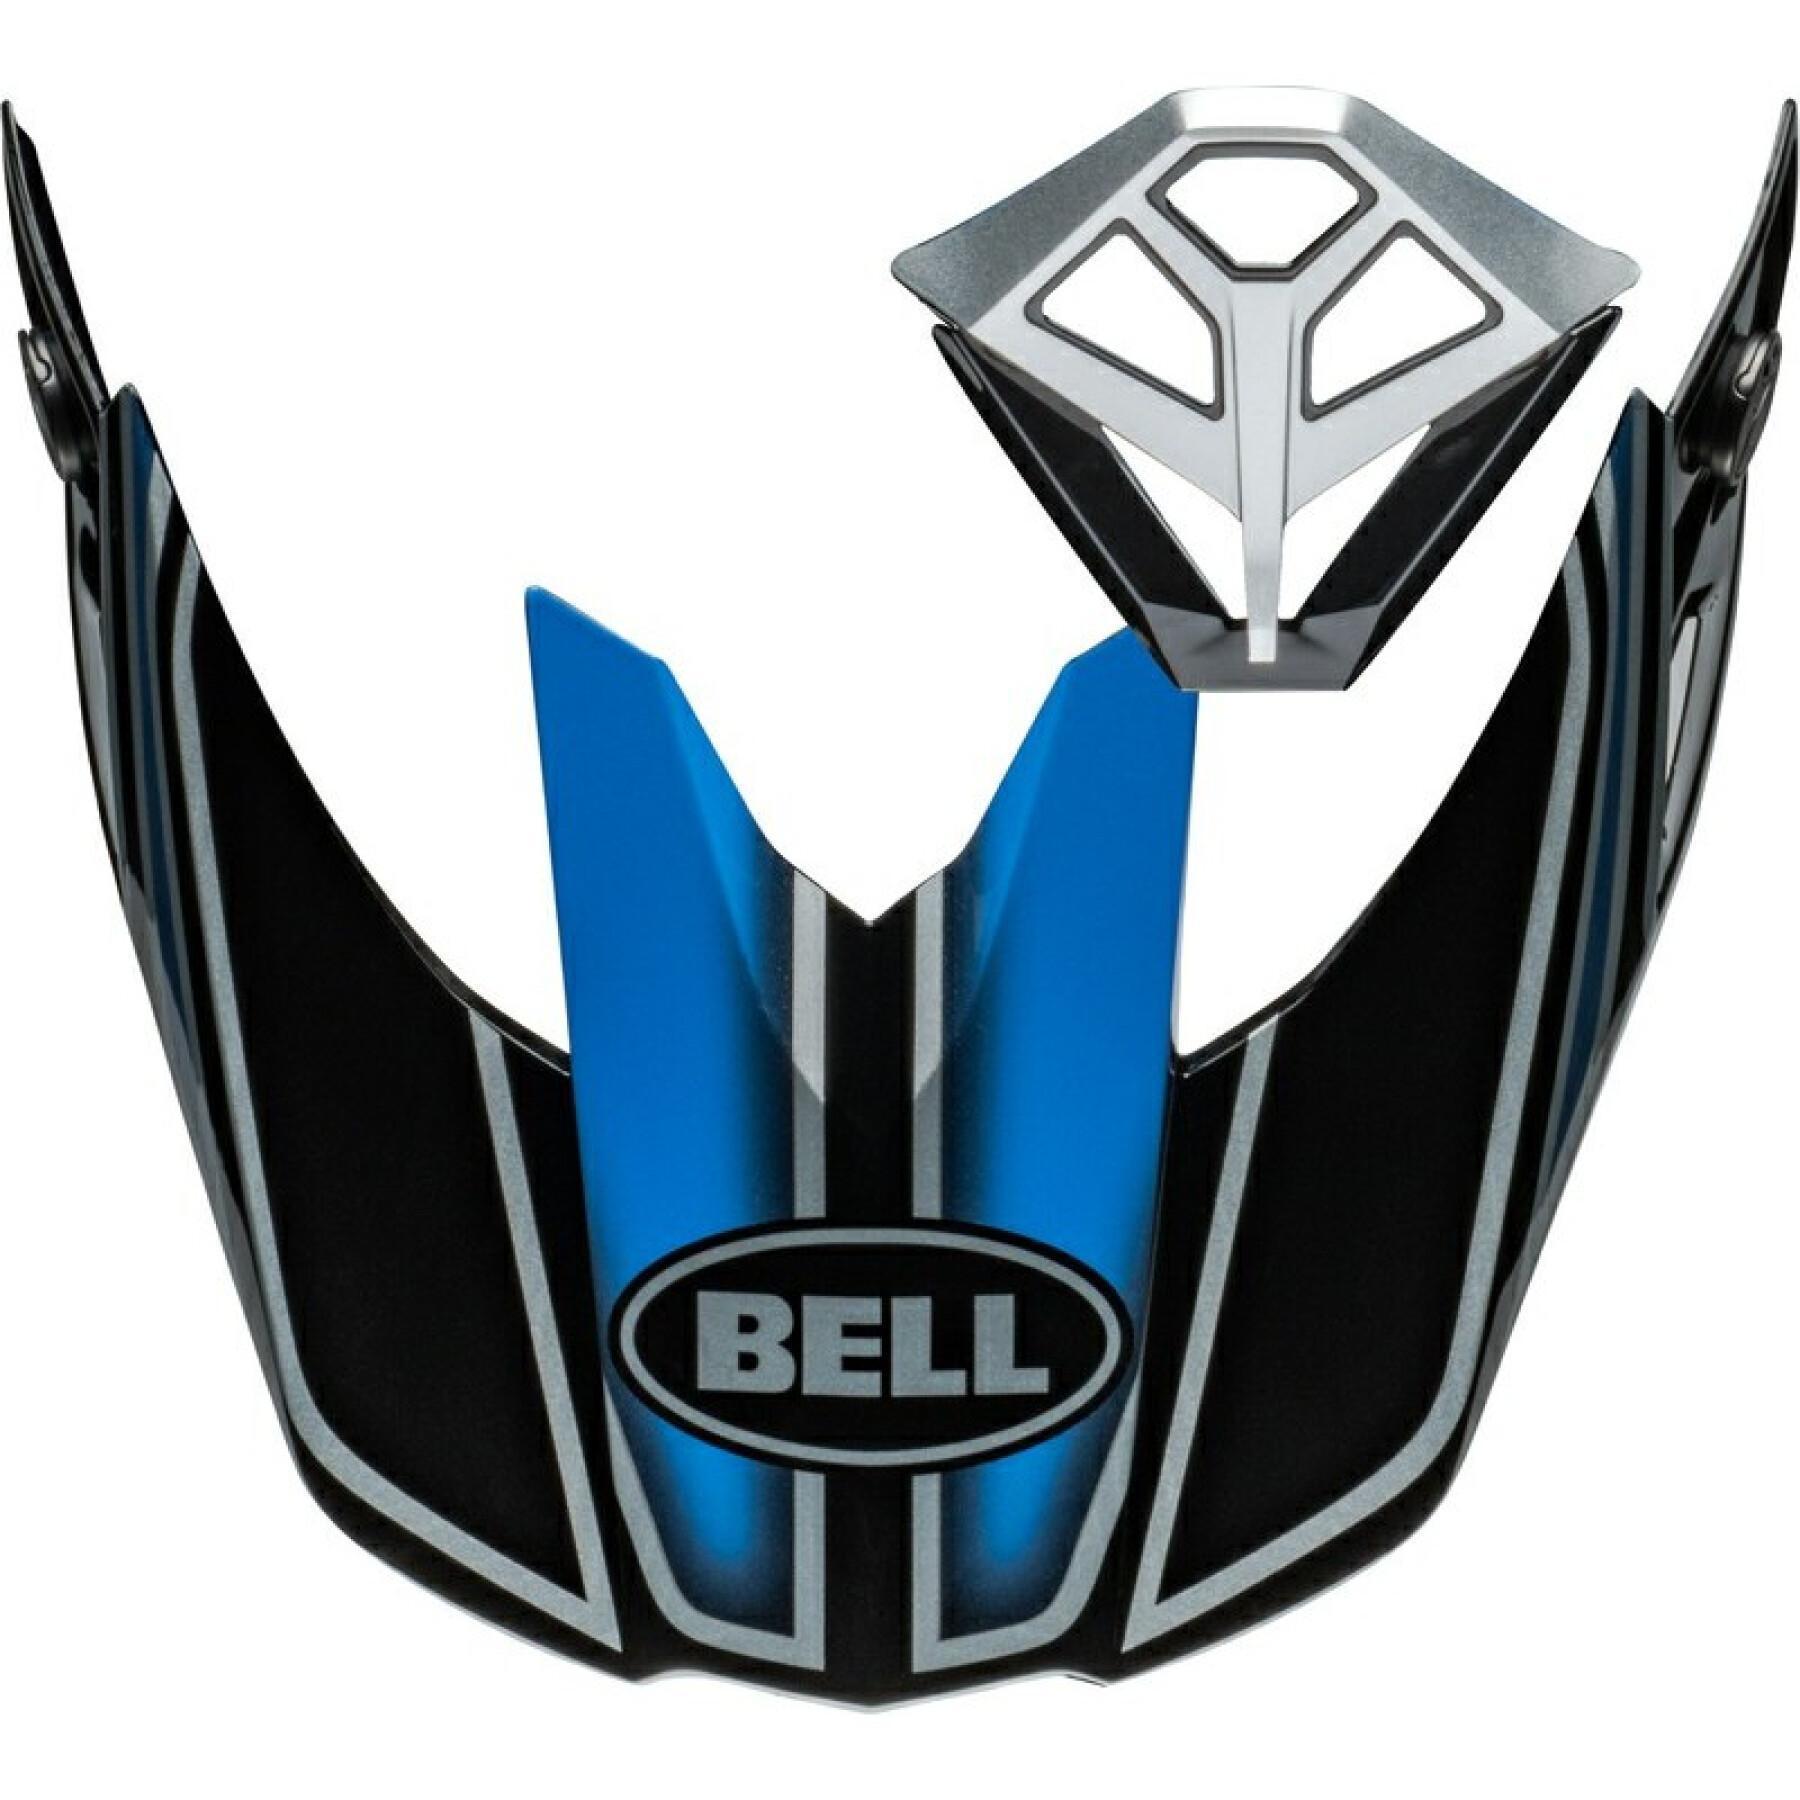 Kit de visera y ventilación bucal para casco de moto Bell 10 - Webb Marmont Gloss North Carolina